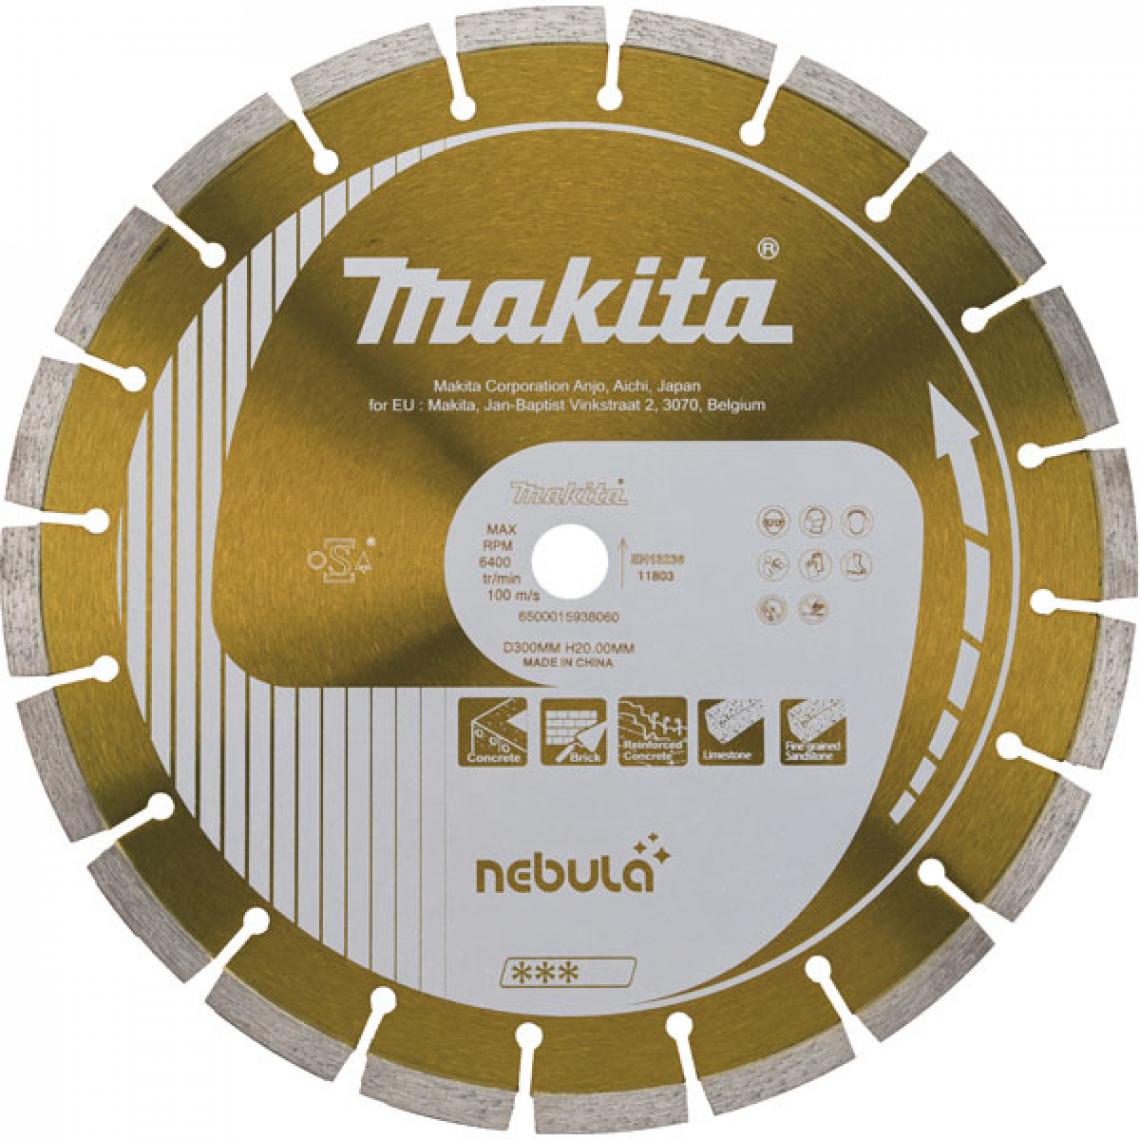 Makita - Disque diamant Nebula Laser 125x22,23 mm MAKITA - B-53992 - Accessoires sciage, tronçonnage